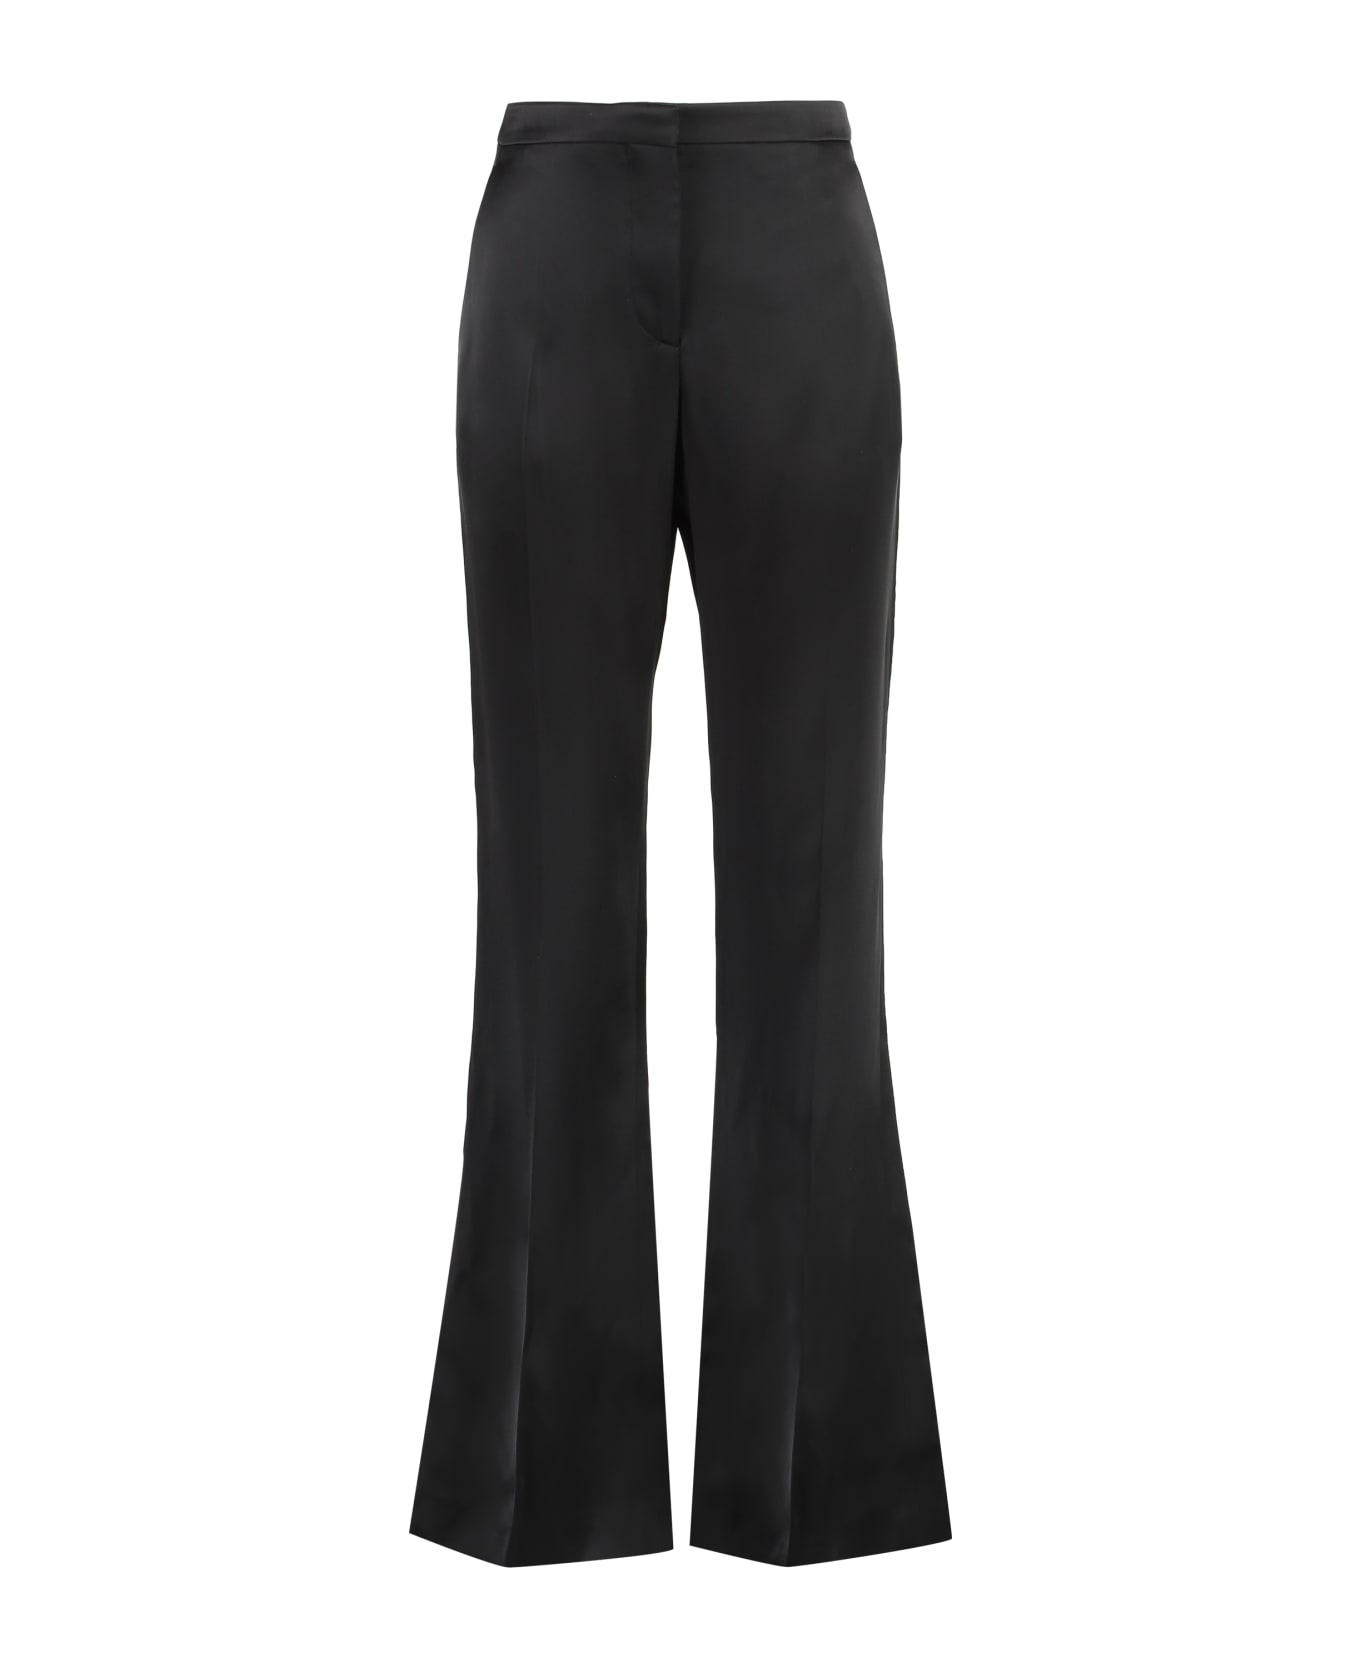 Givenchy Flare Tailoring Pants - black